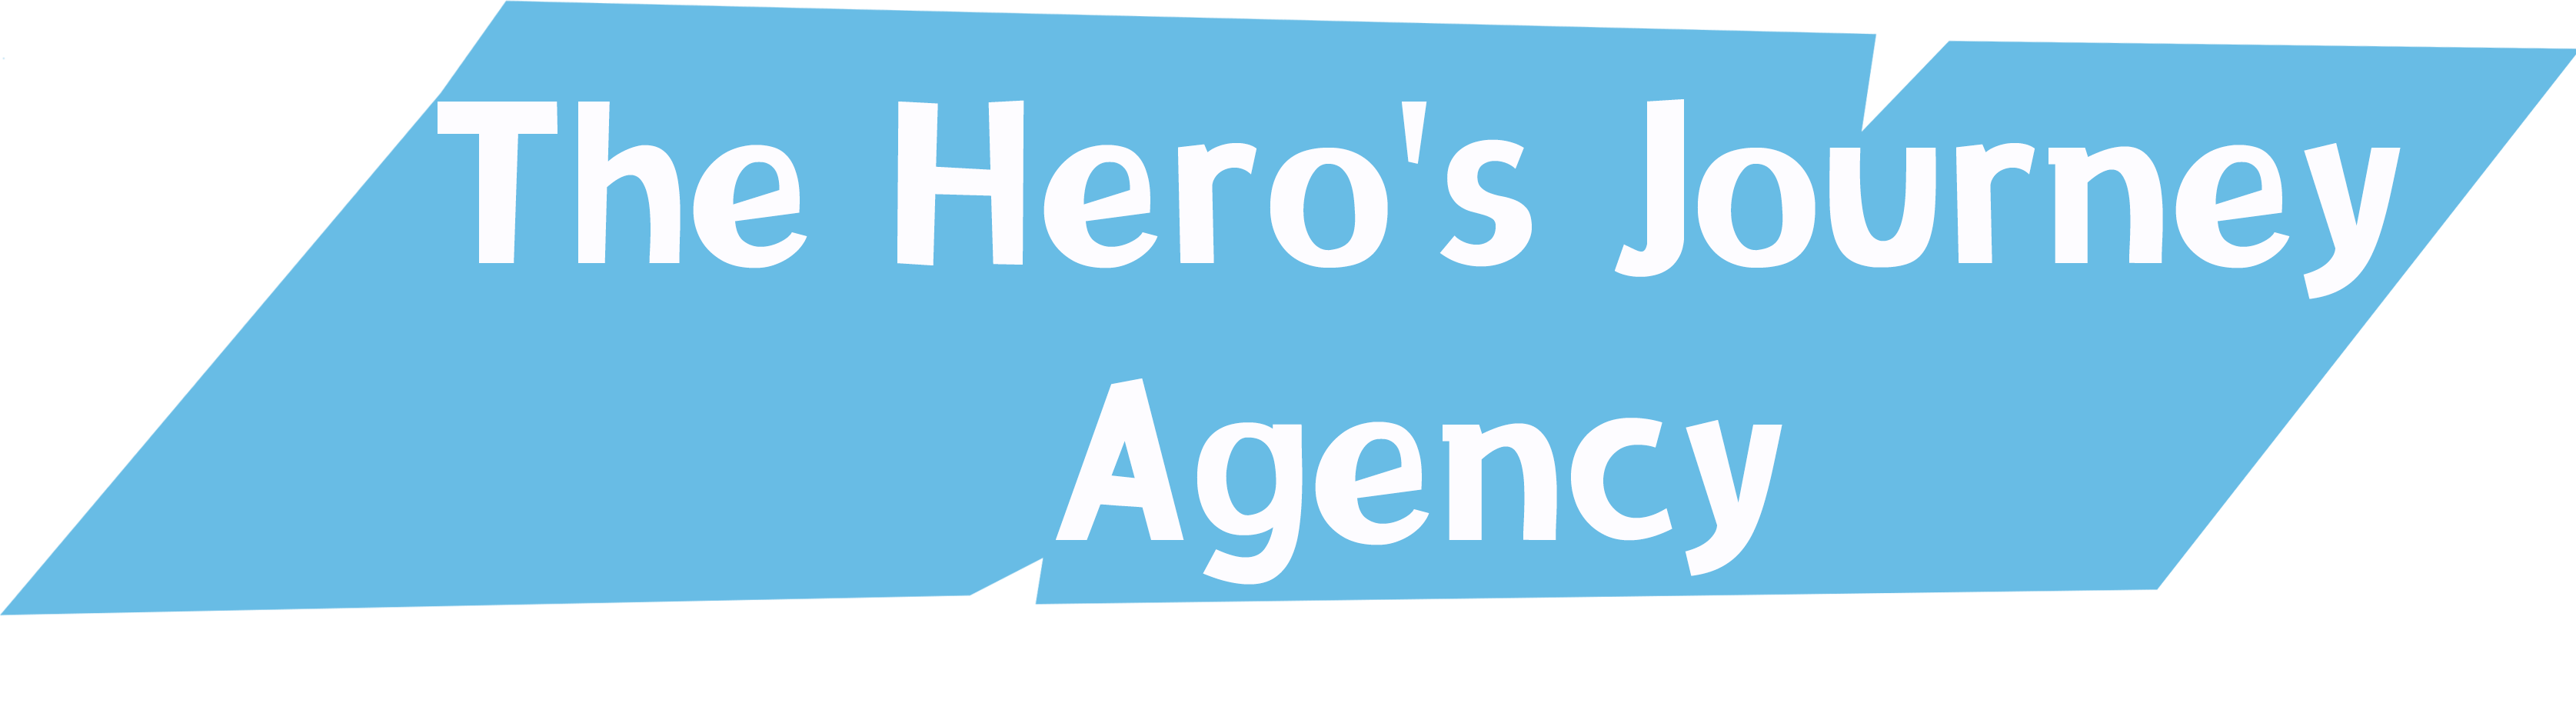 The Hero's Journey Agency